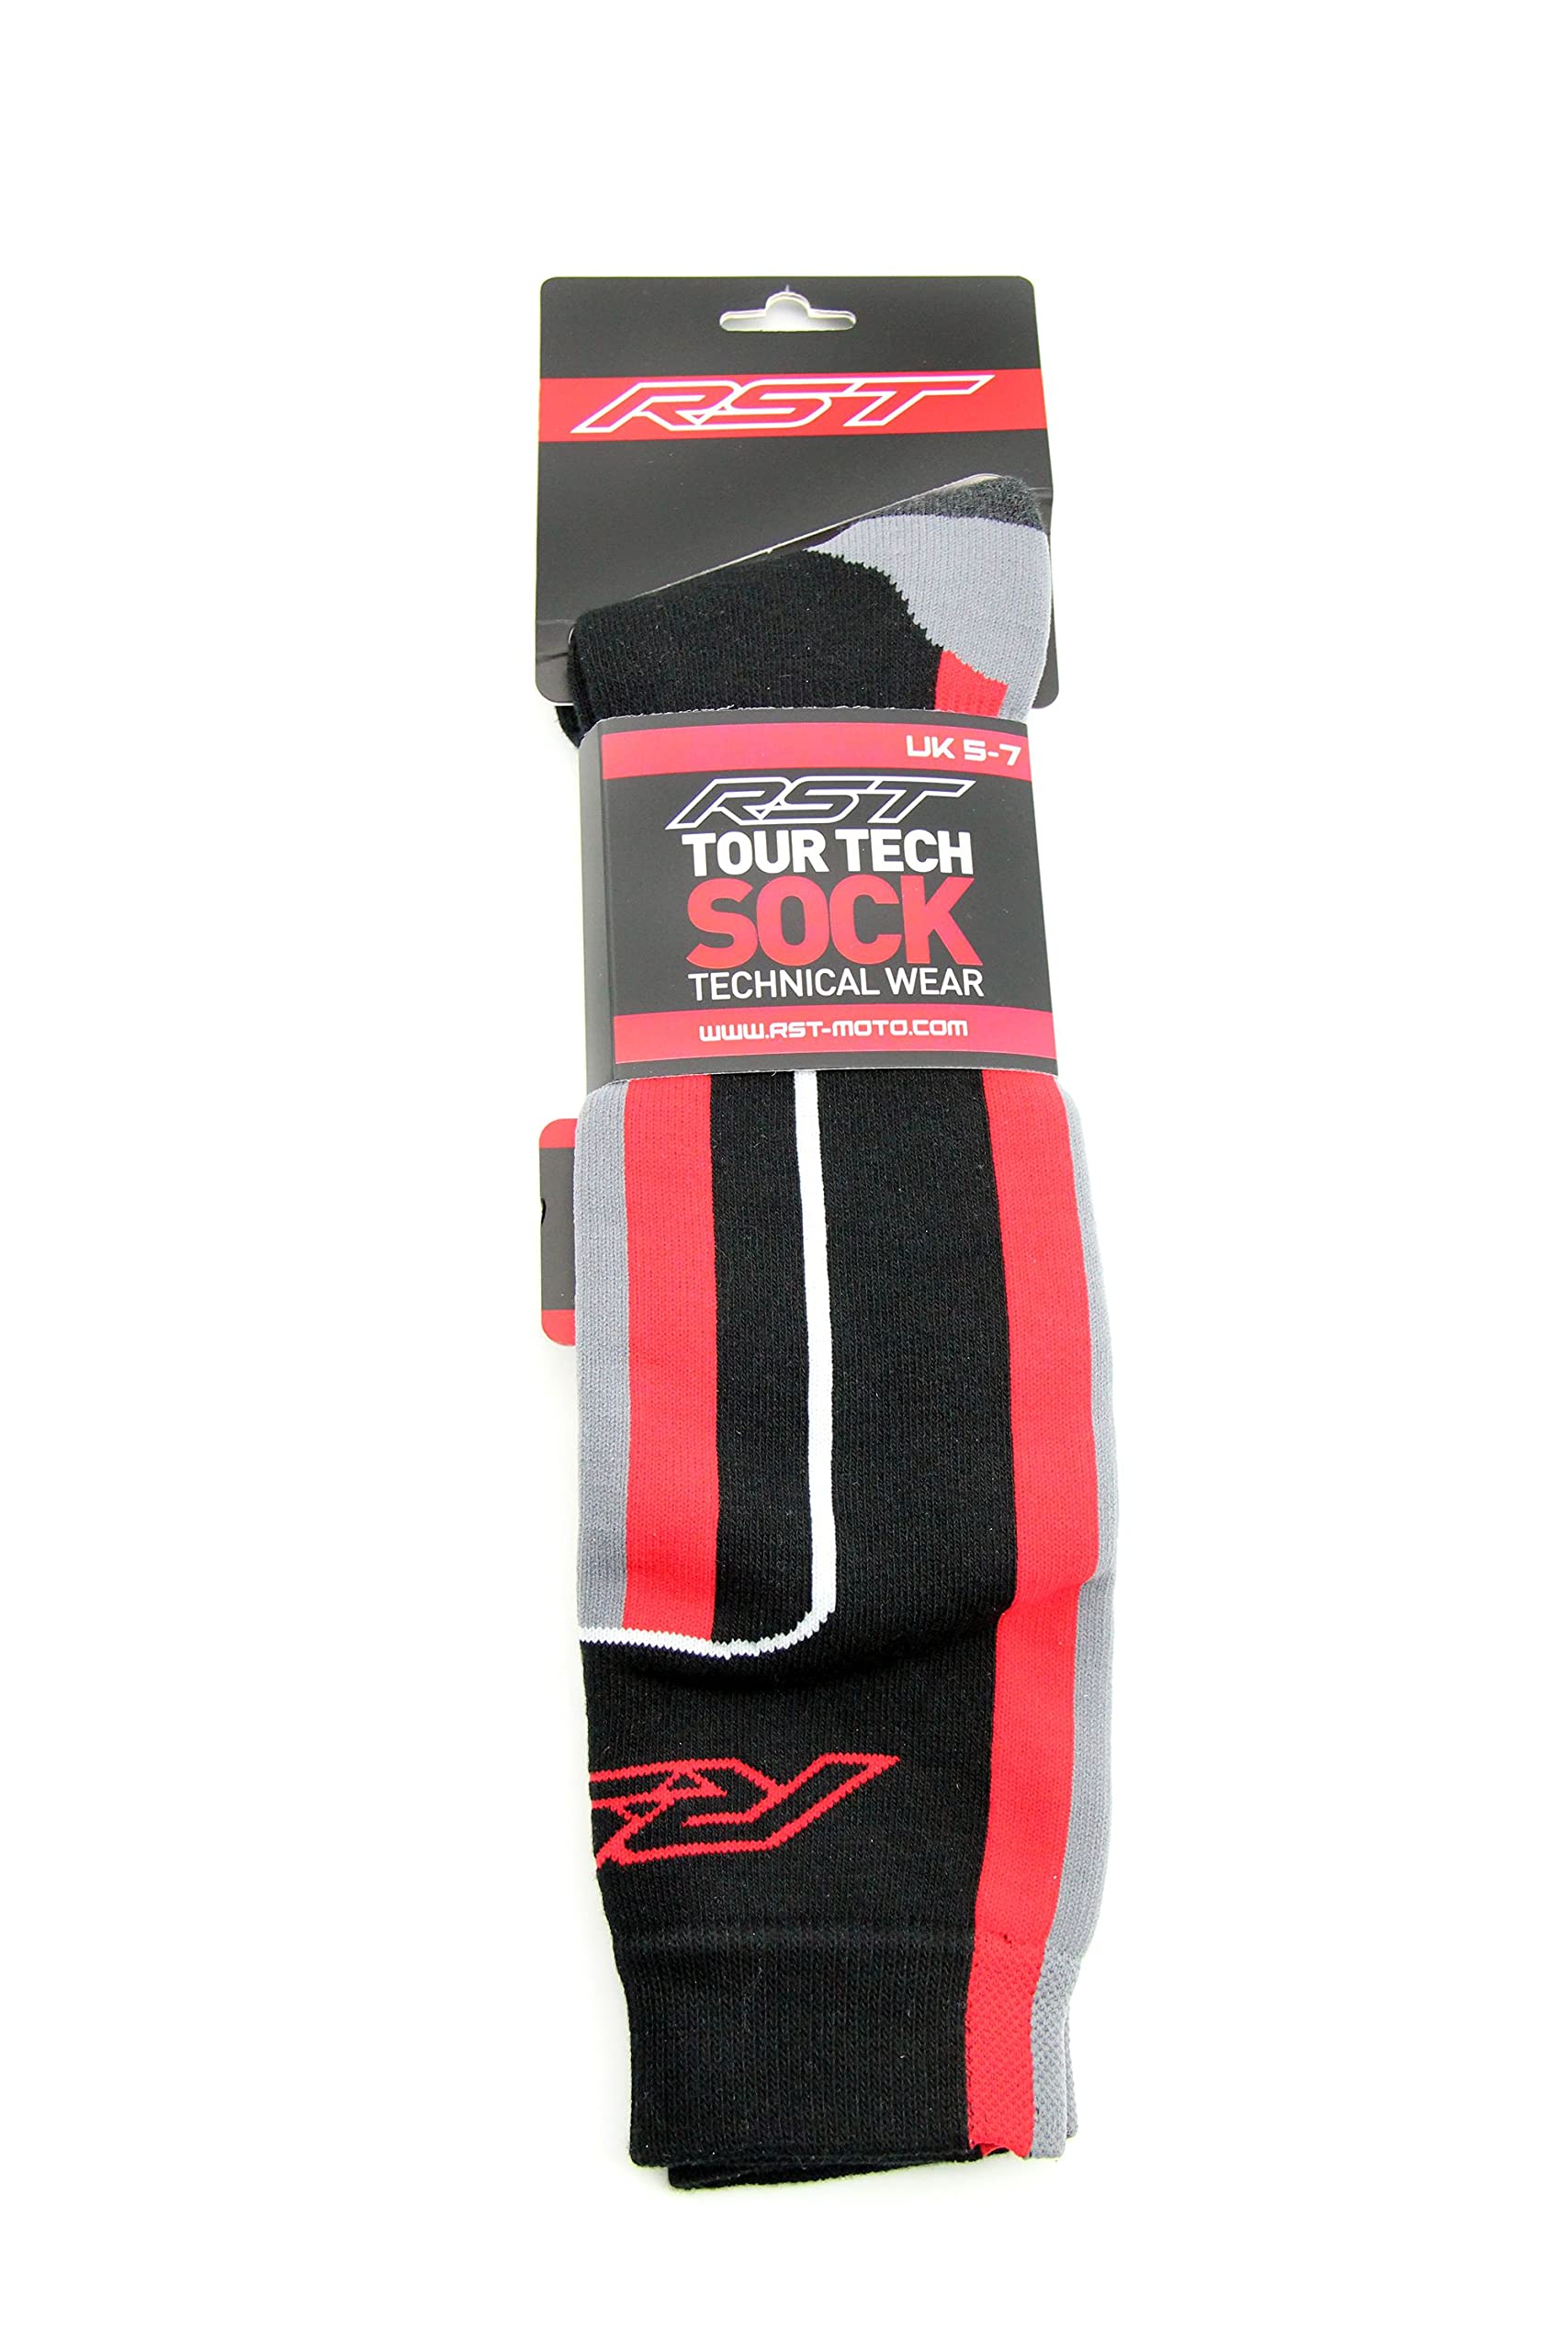 RST Tour Tech 0003 Sock Black/Red 5-7 M von RST